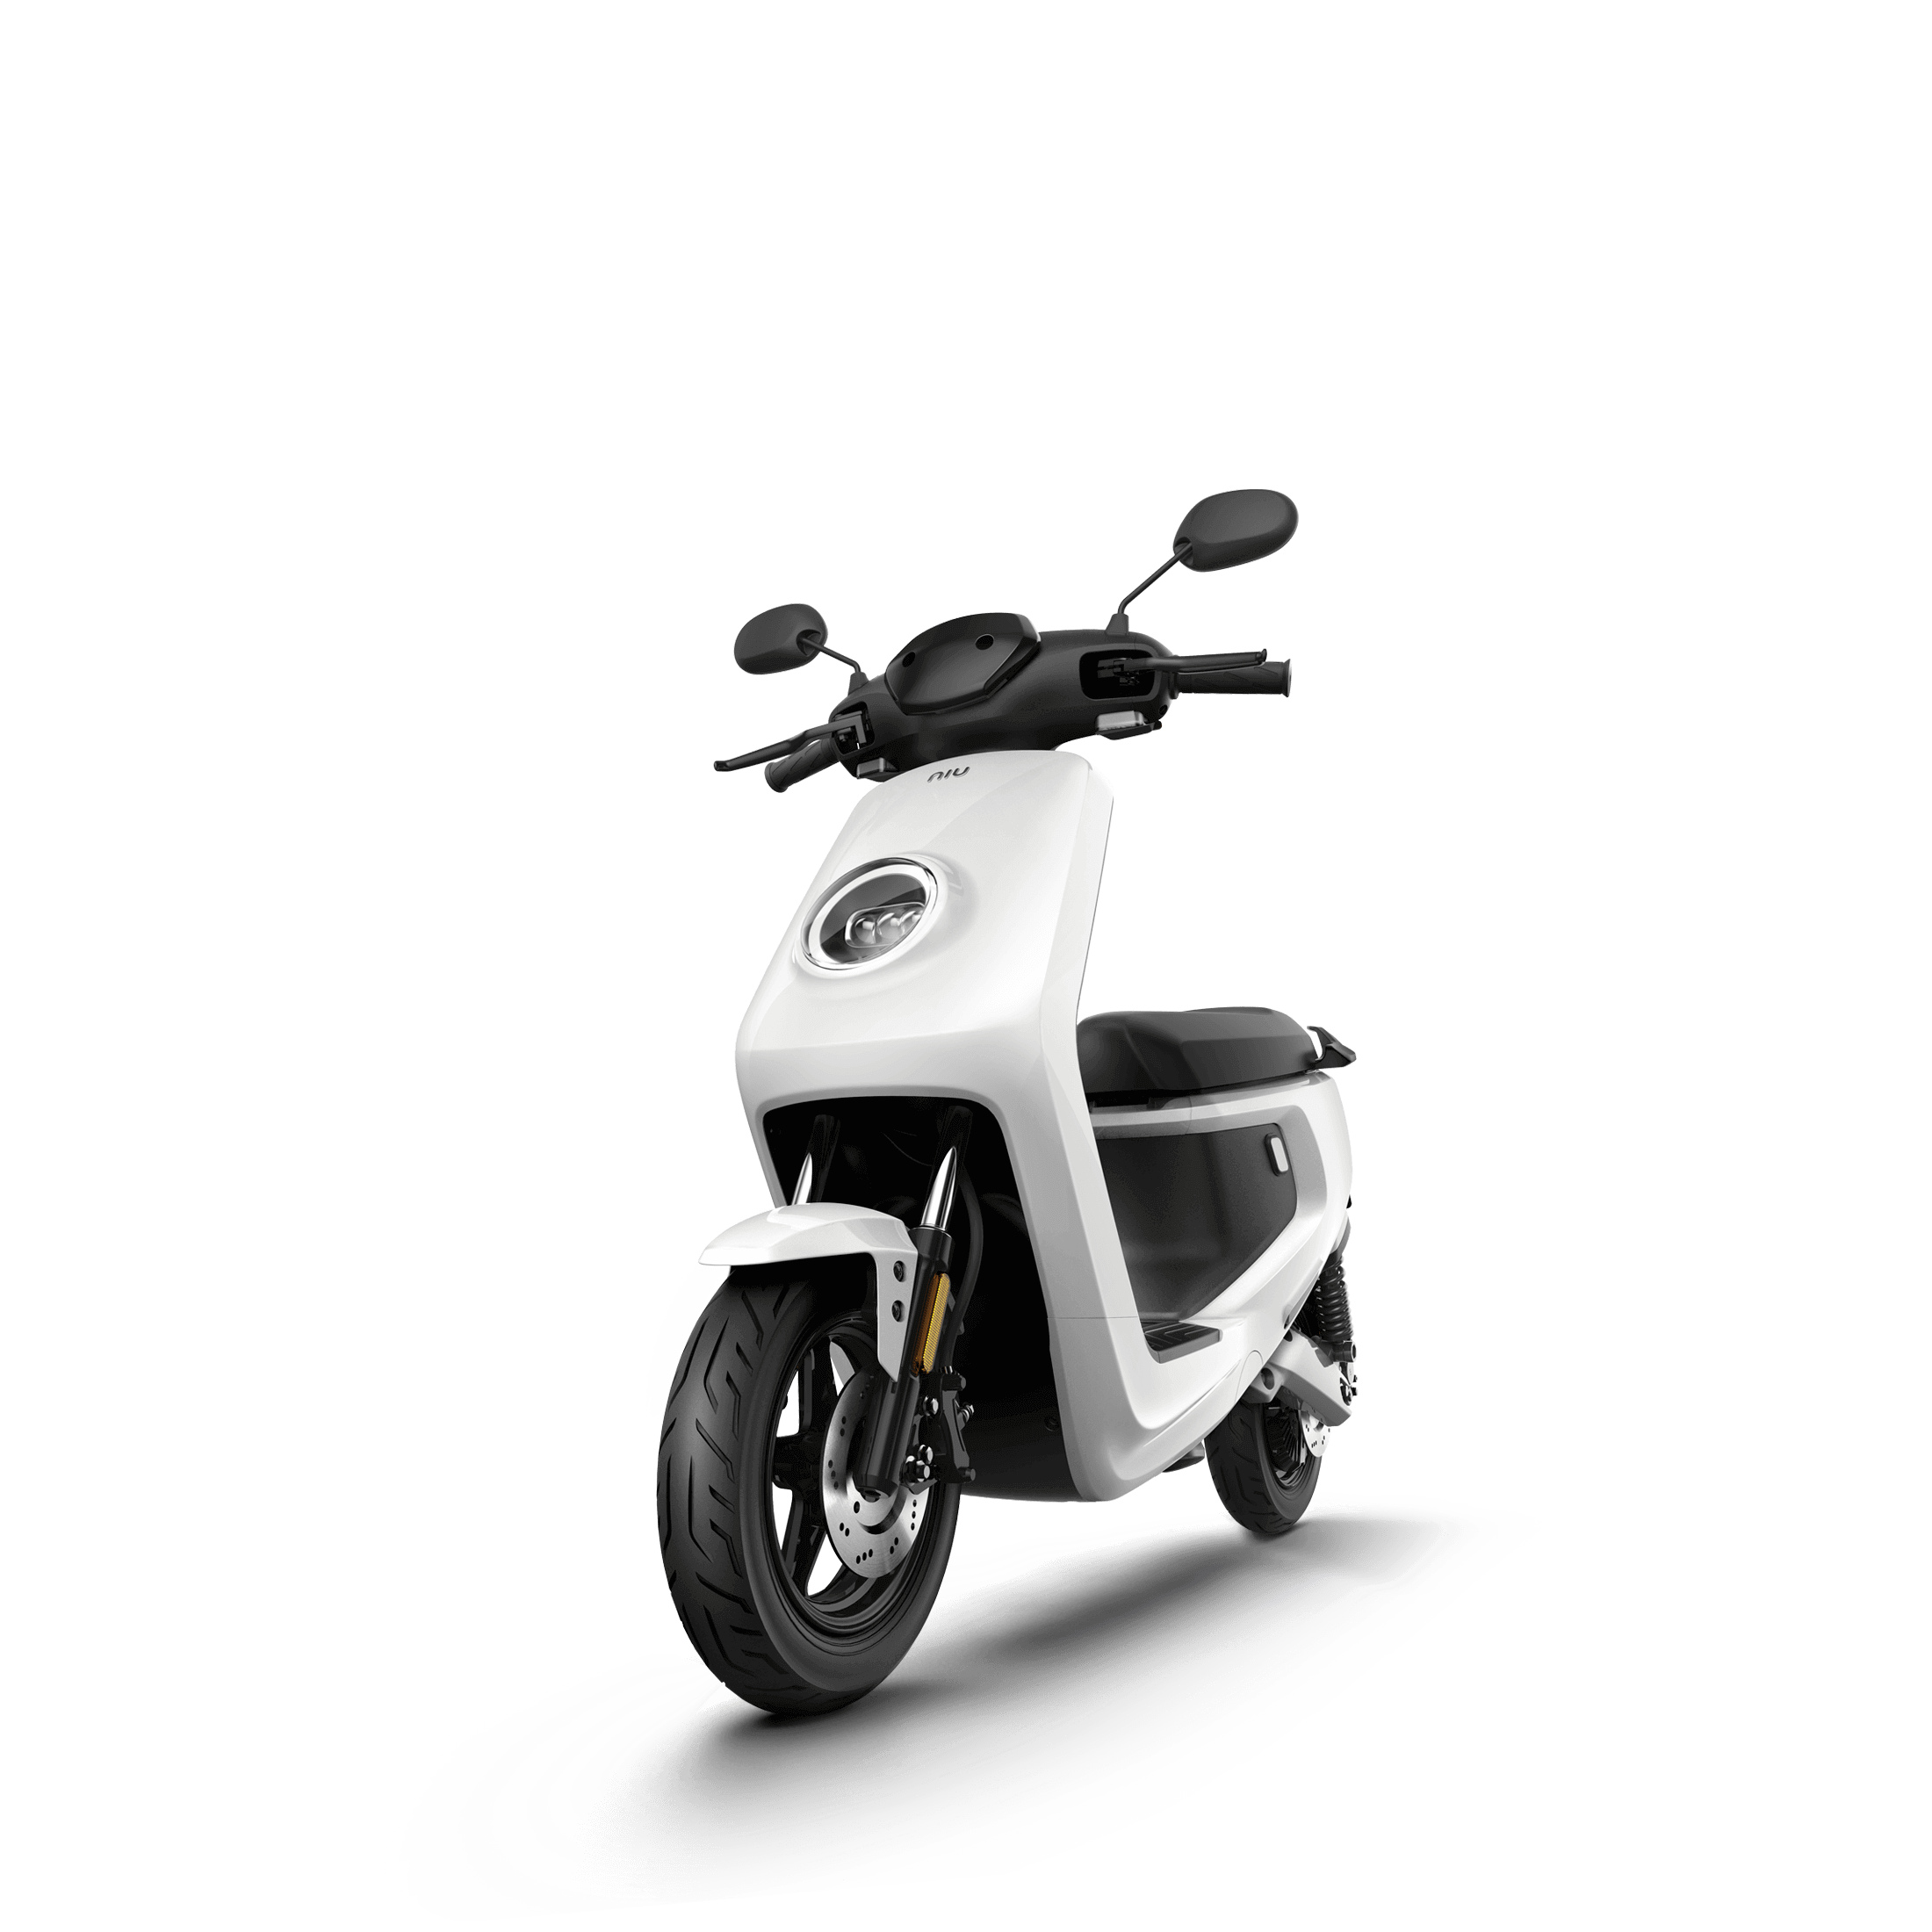 MQi Sport (1,5 kWh – 2 kWh) - Riverside Motorcycles